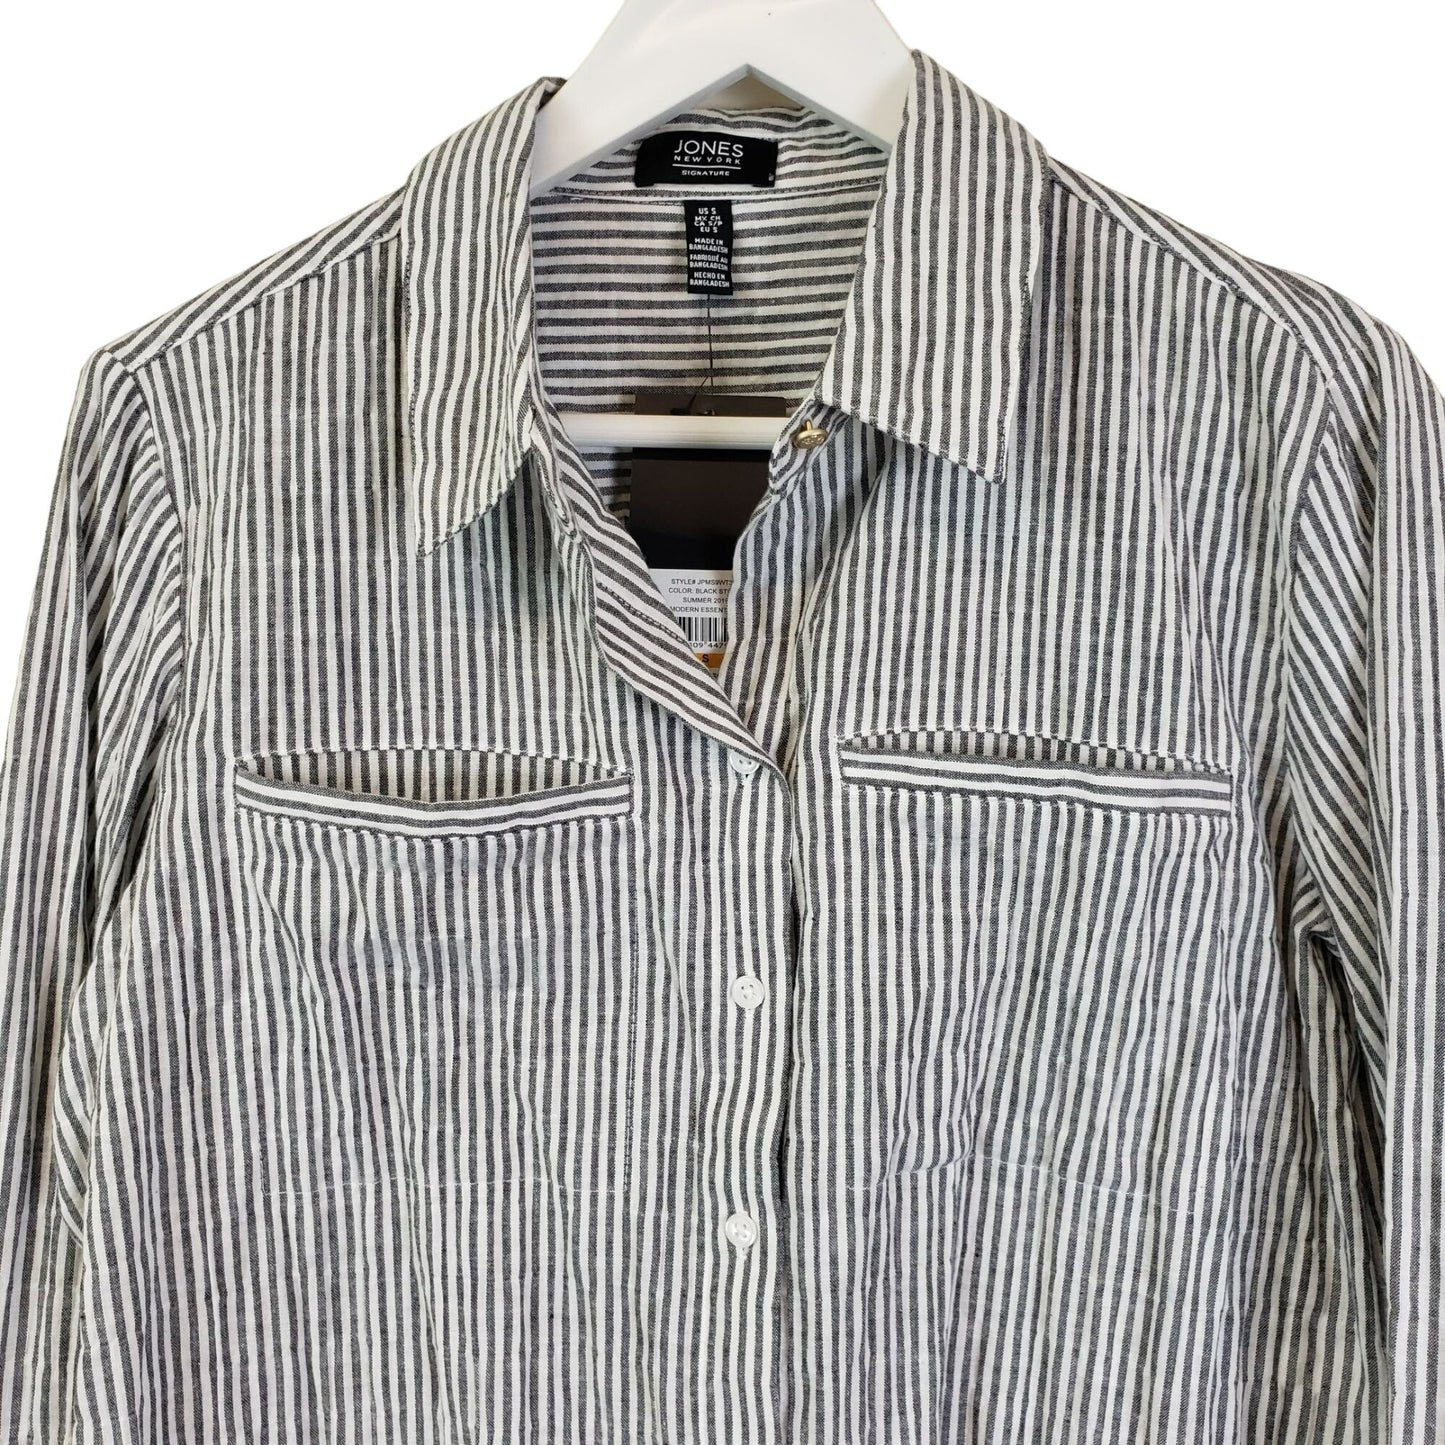 NWT Jones New York Striped Puff Texture Button Down Shirt Size Small